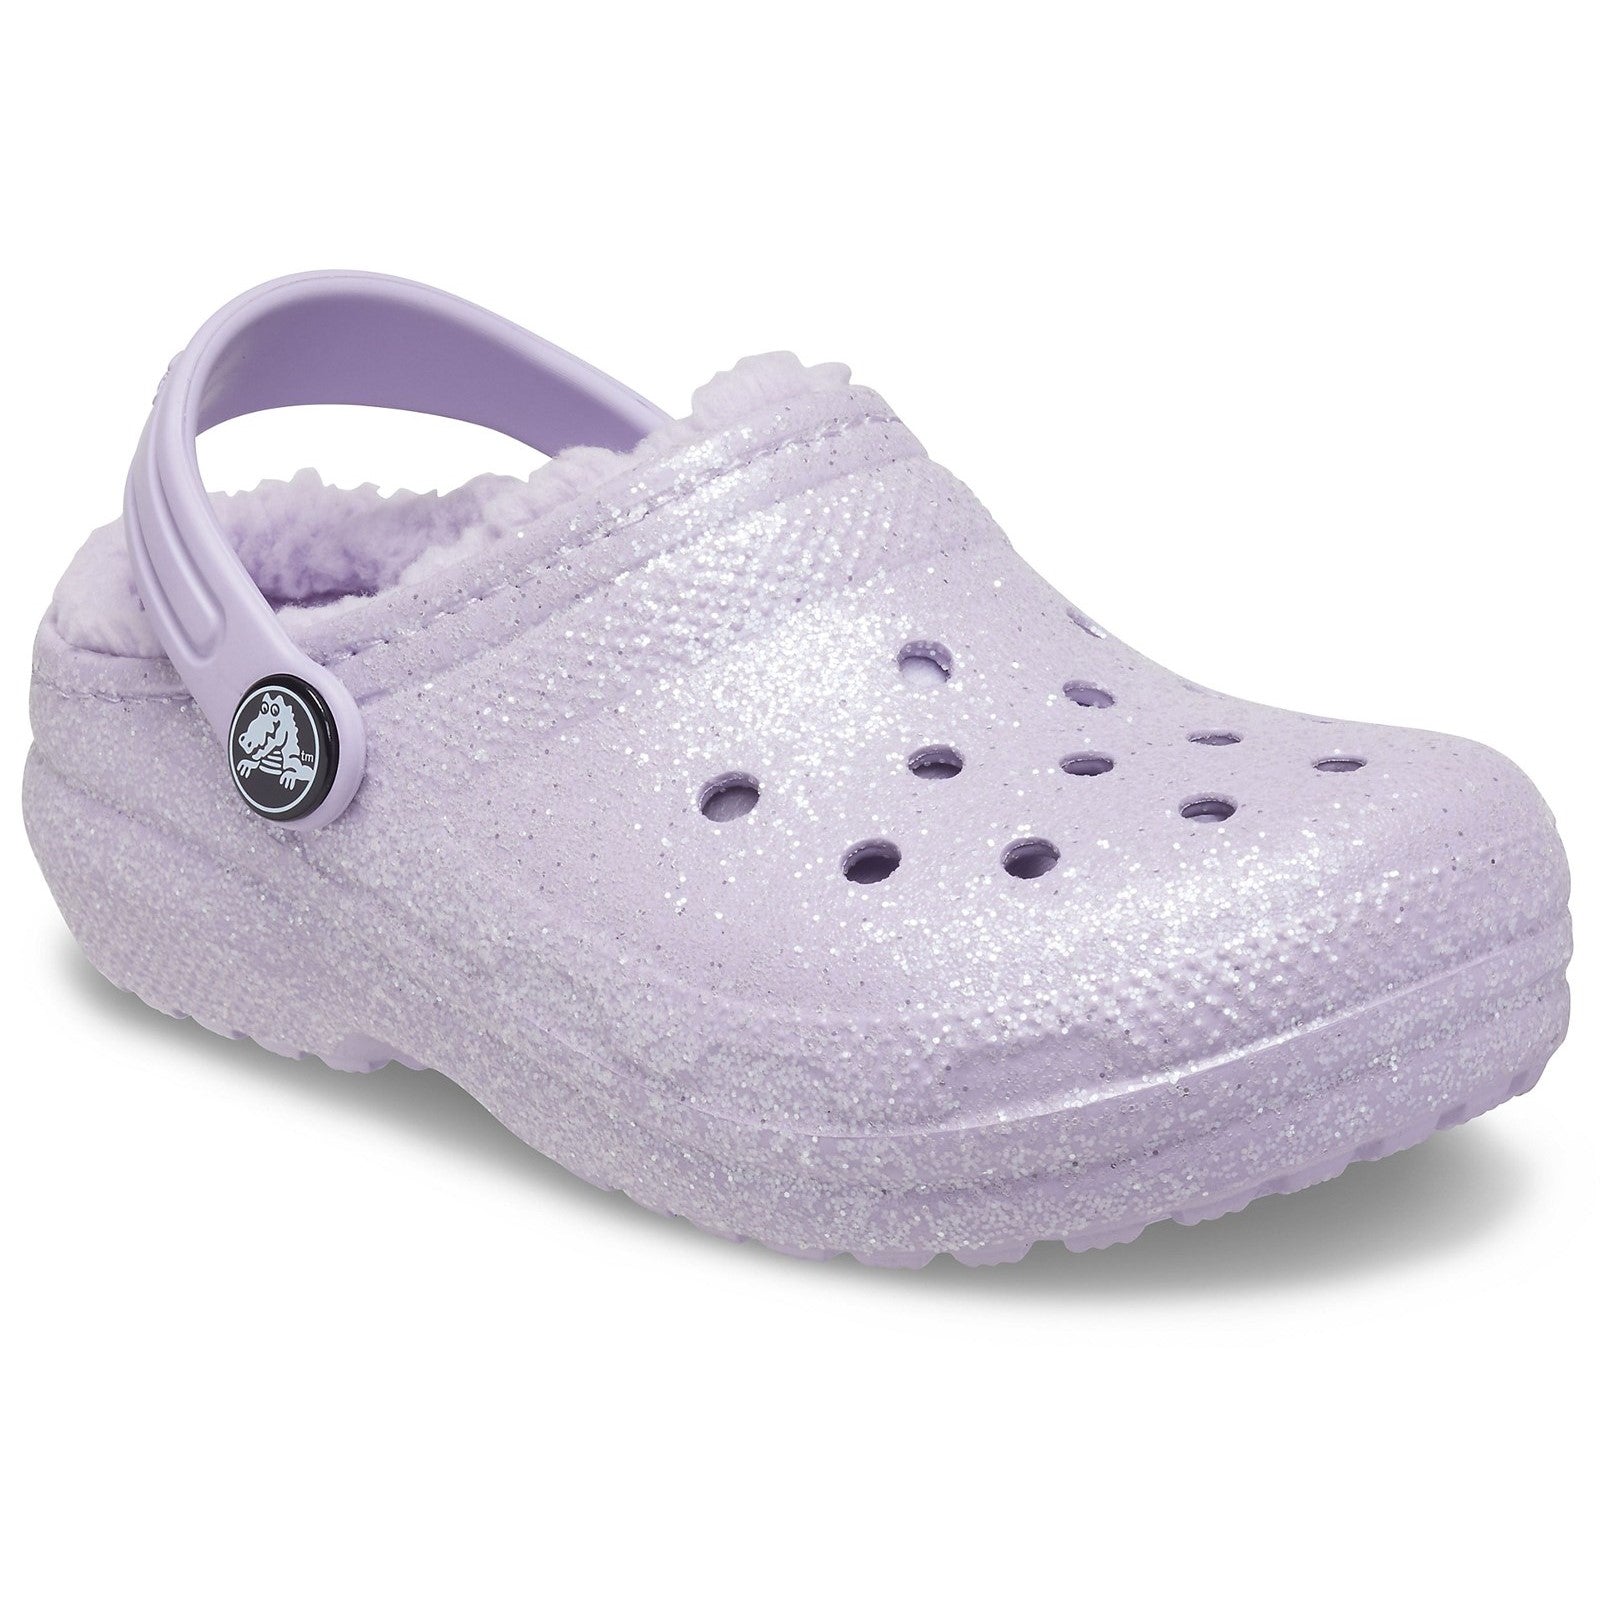 Crocs Classic Glitter Lined Clog Sandals